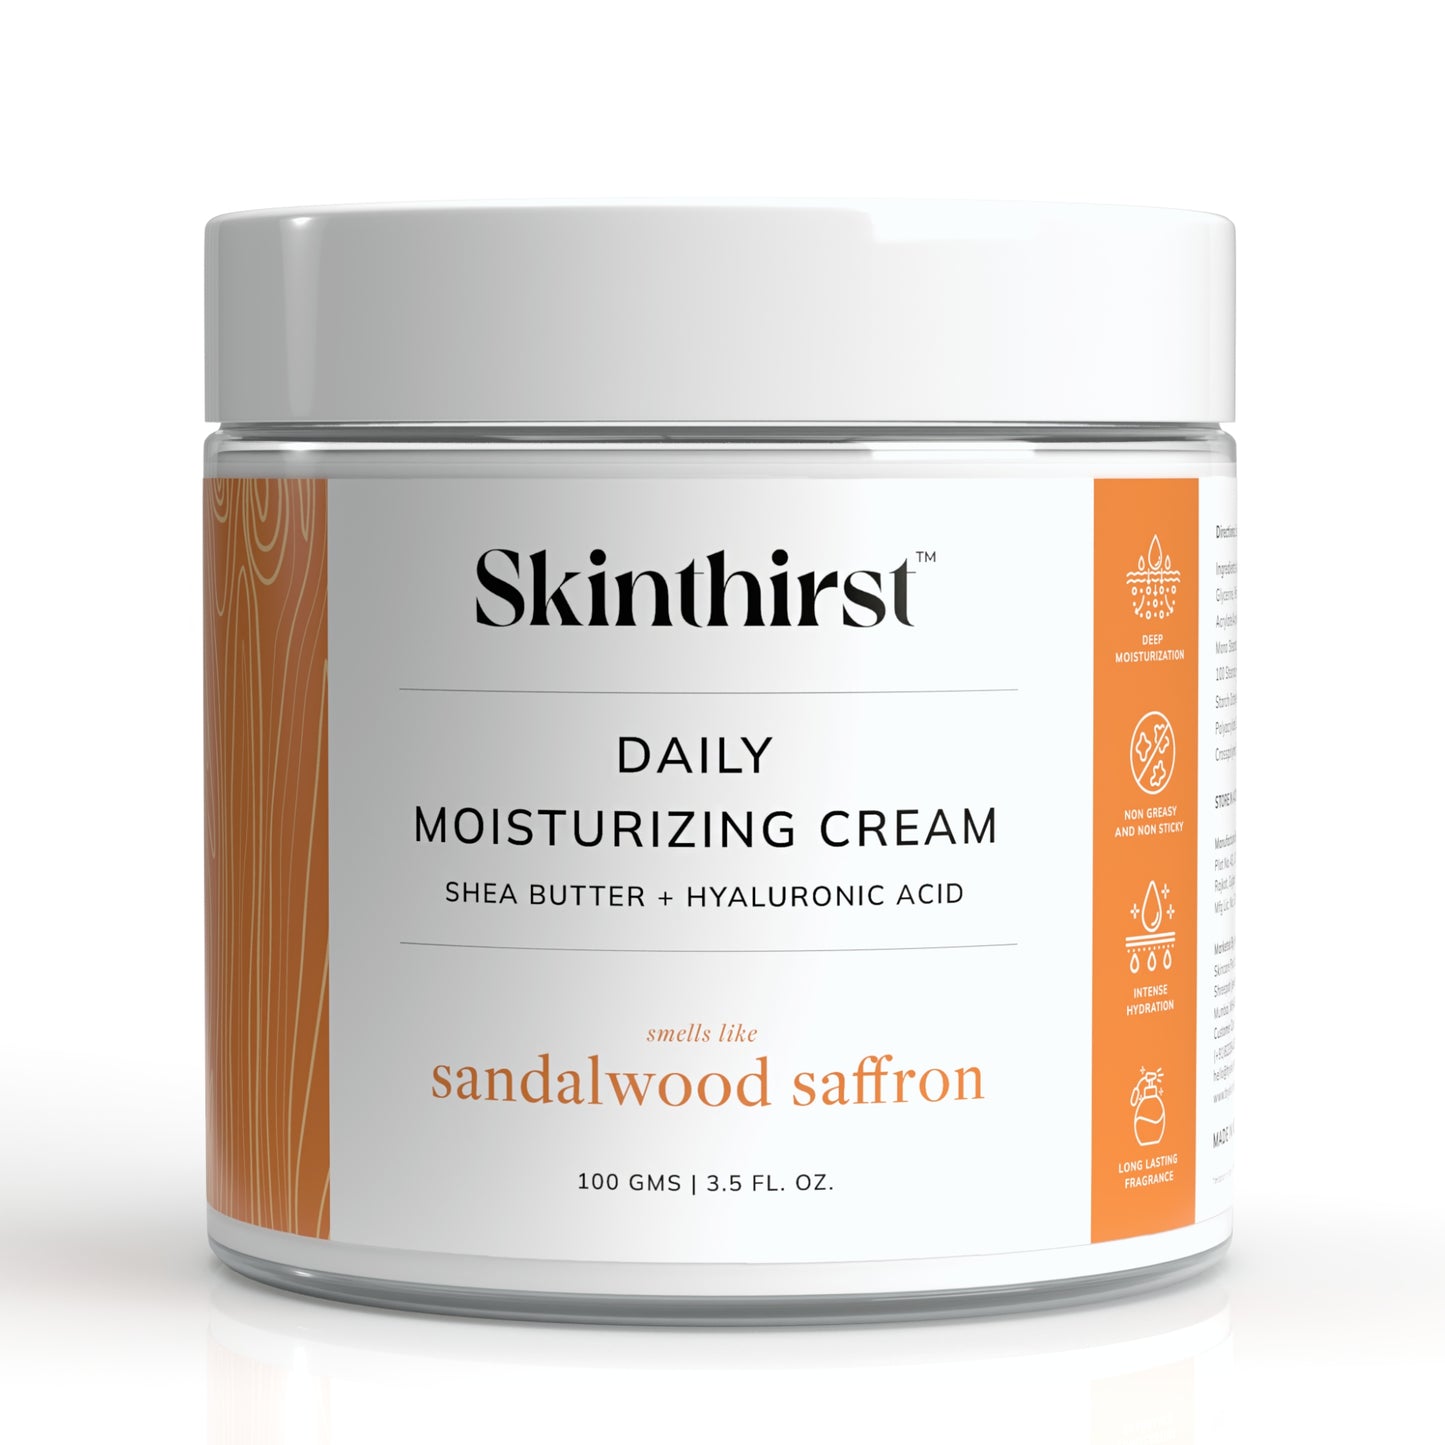 Sandalwood & Saffron Daily Moisturizing Body Cream